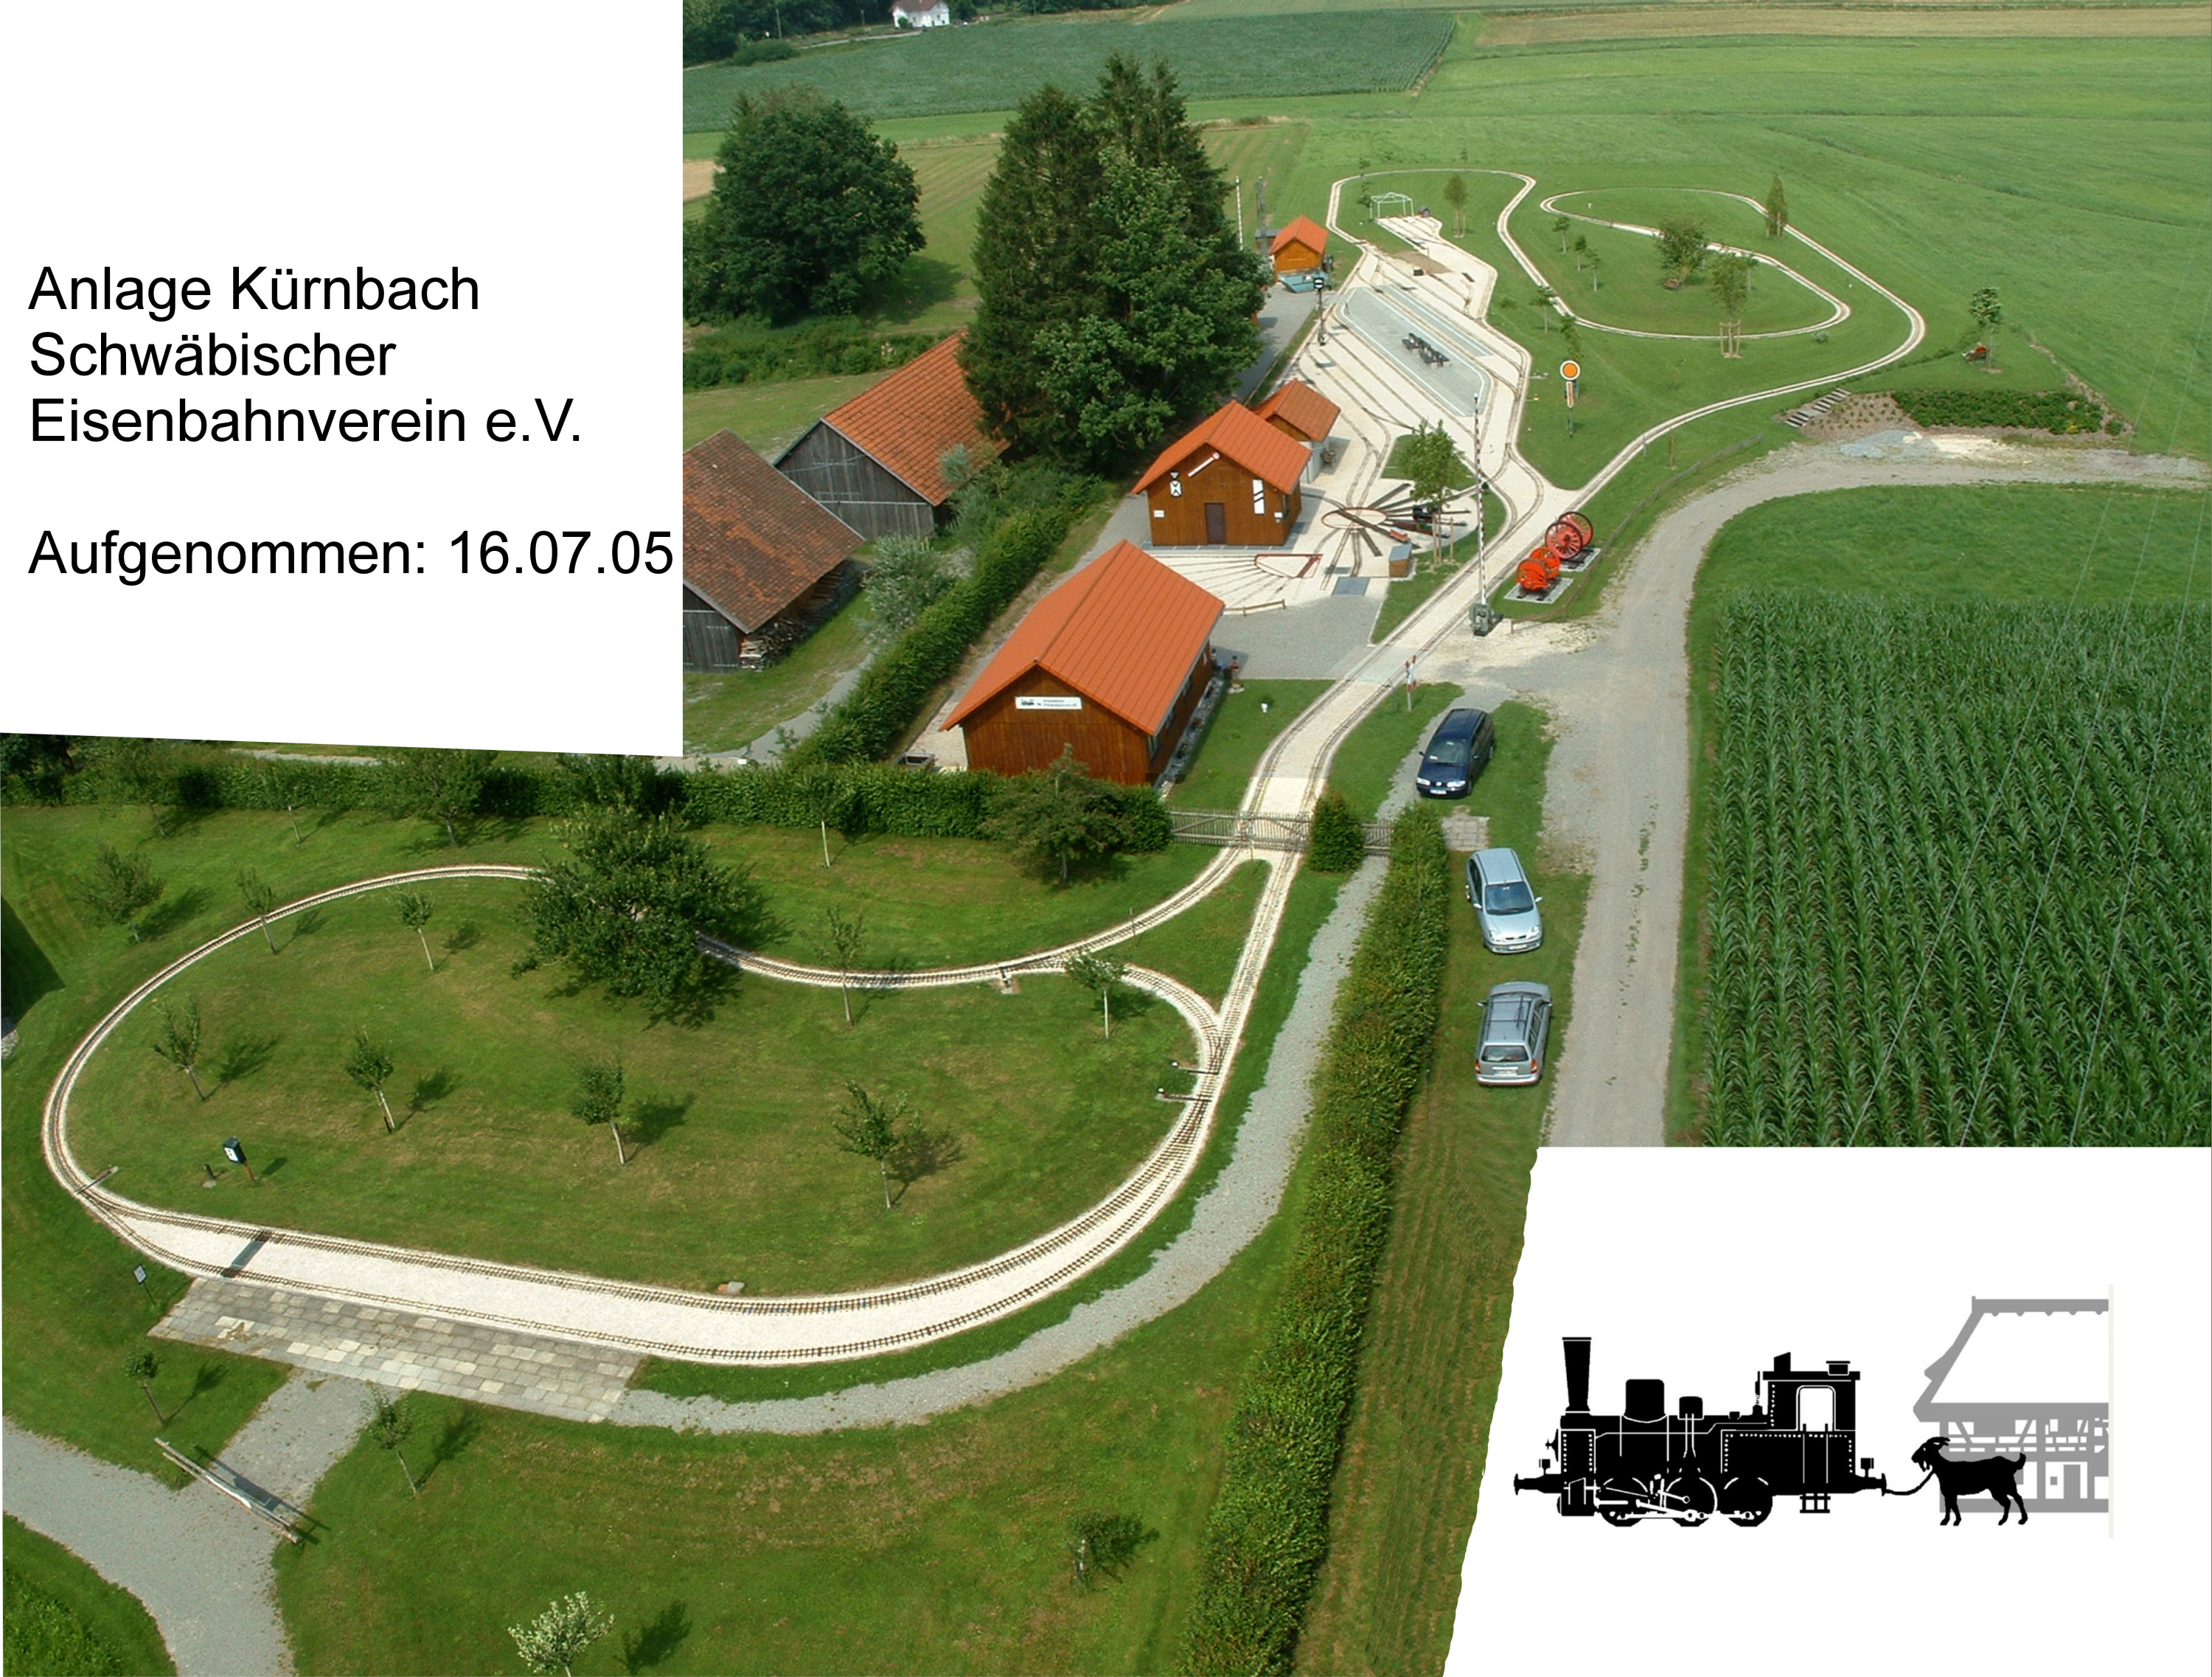 Track in Bad Schussenried